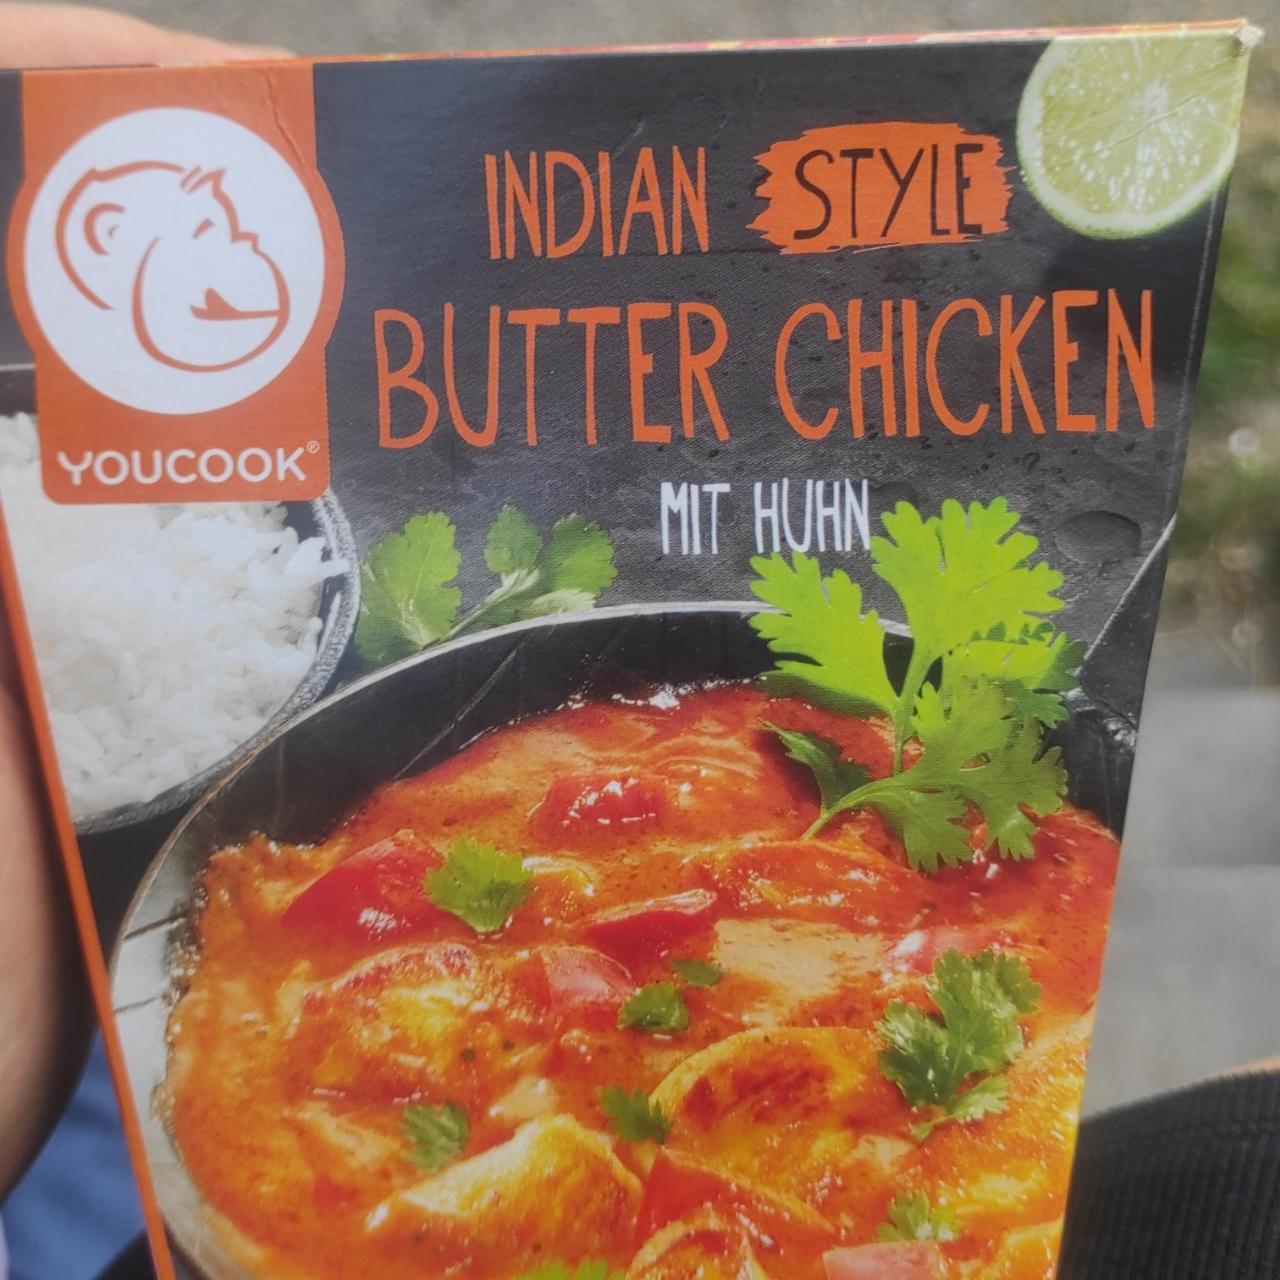 Фото - сливочная курица в индийском стиле indian Butter Chicken mit huhn Youcook